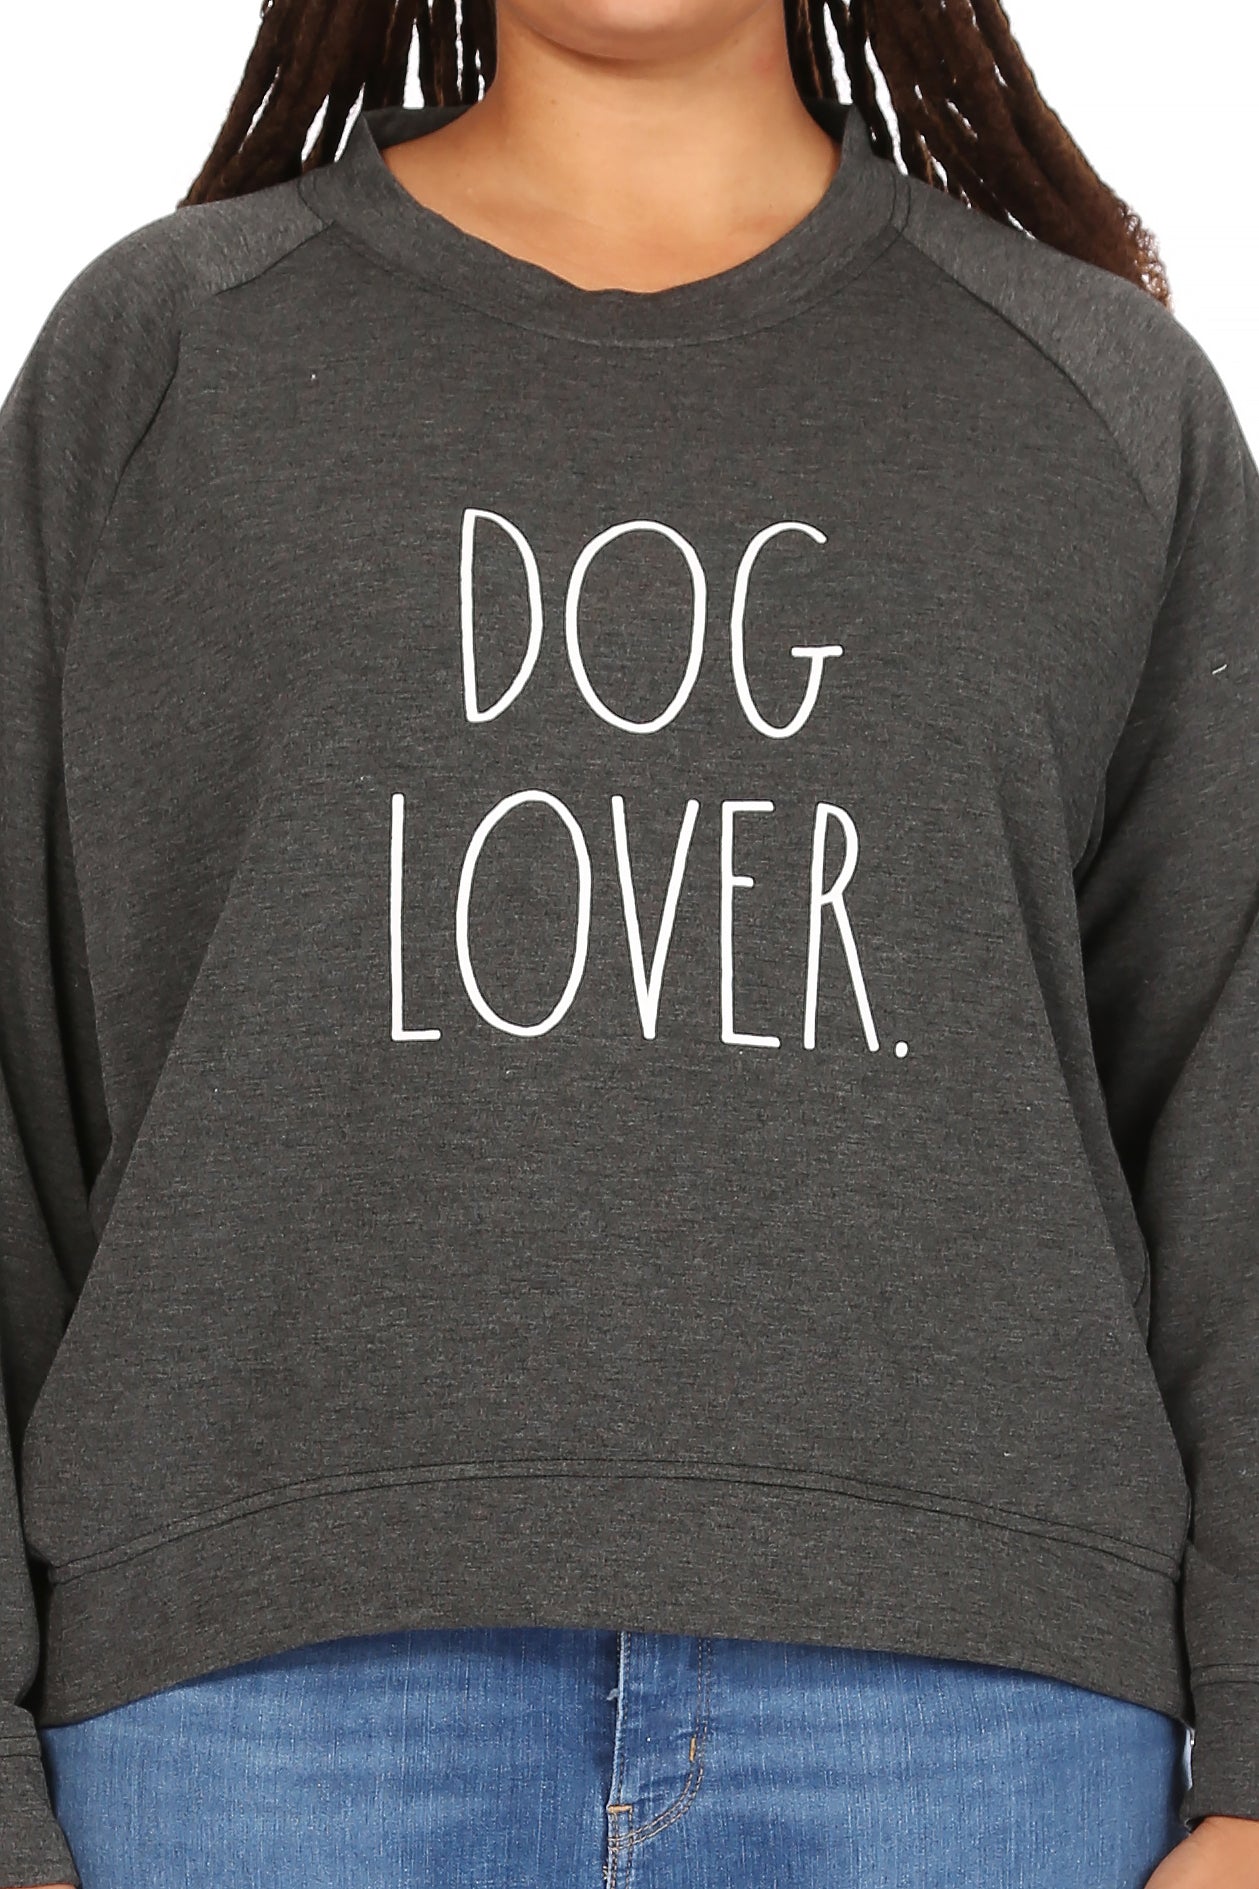 Women's "DOG LOVER" Plus Size Studio Raglan Pullover Sweatshirt - Rae Dunn Wear